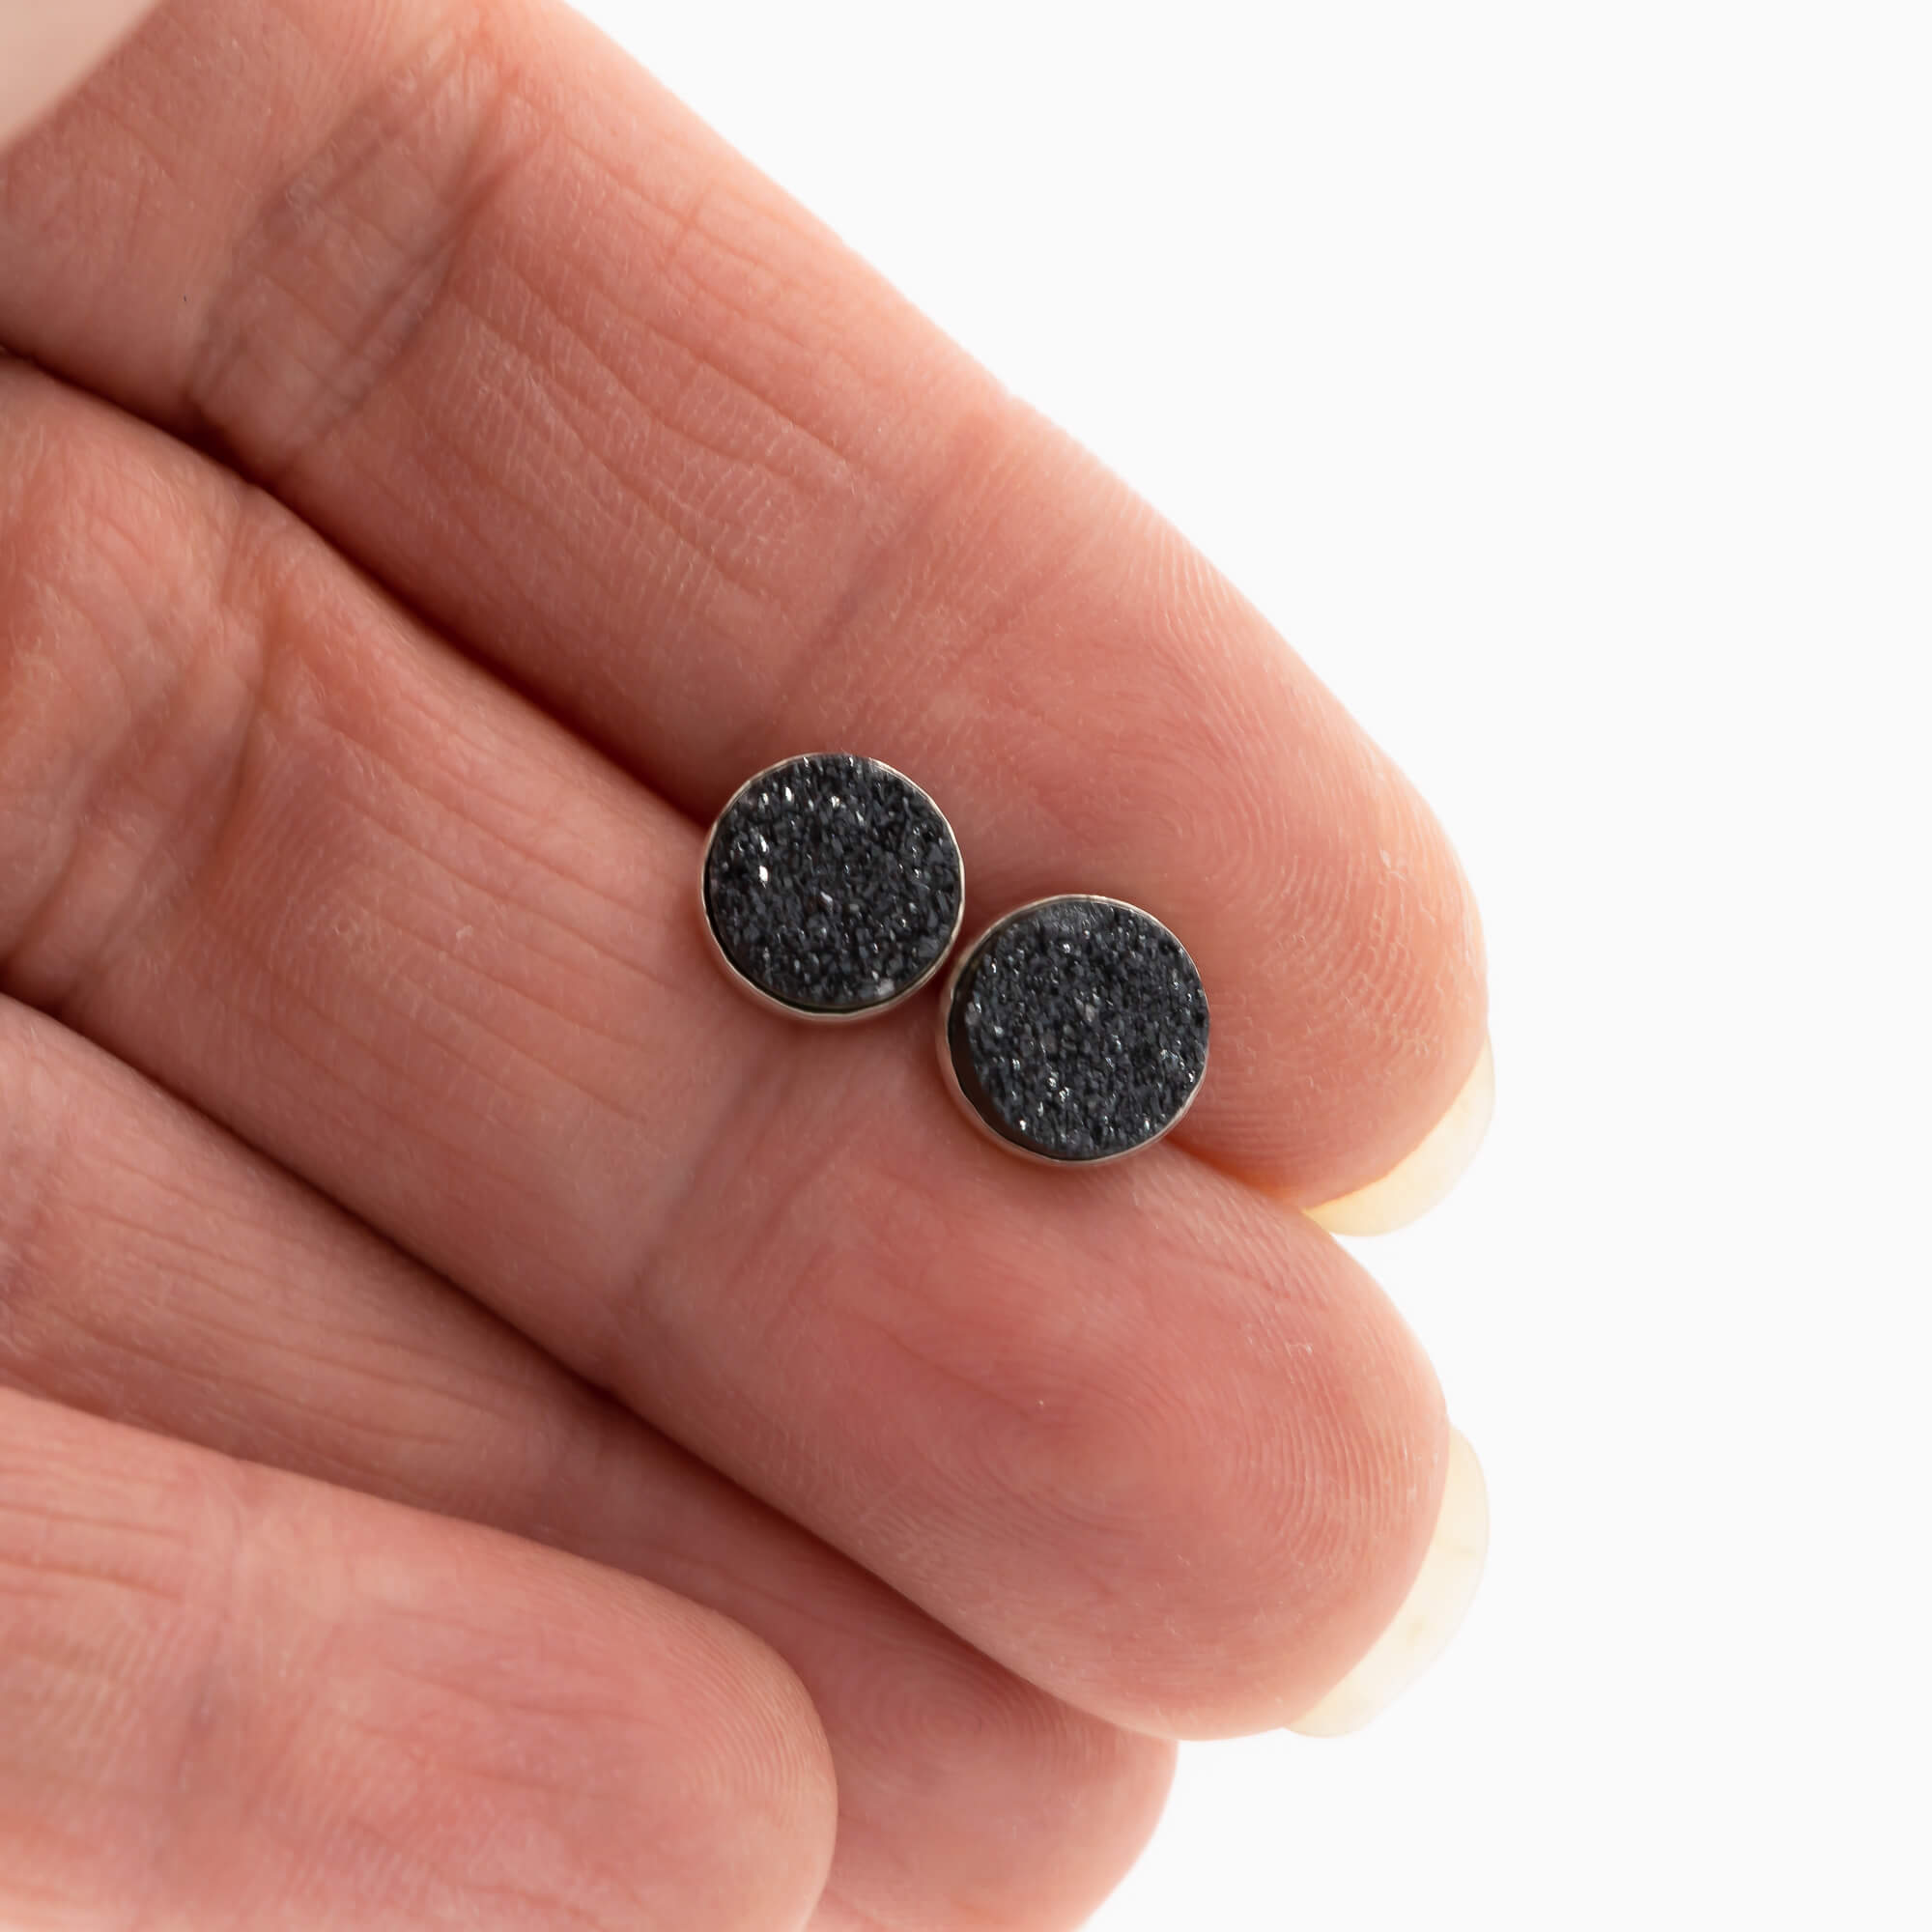 8mm black druzy stud earrings in sterling silver shown for scale